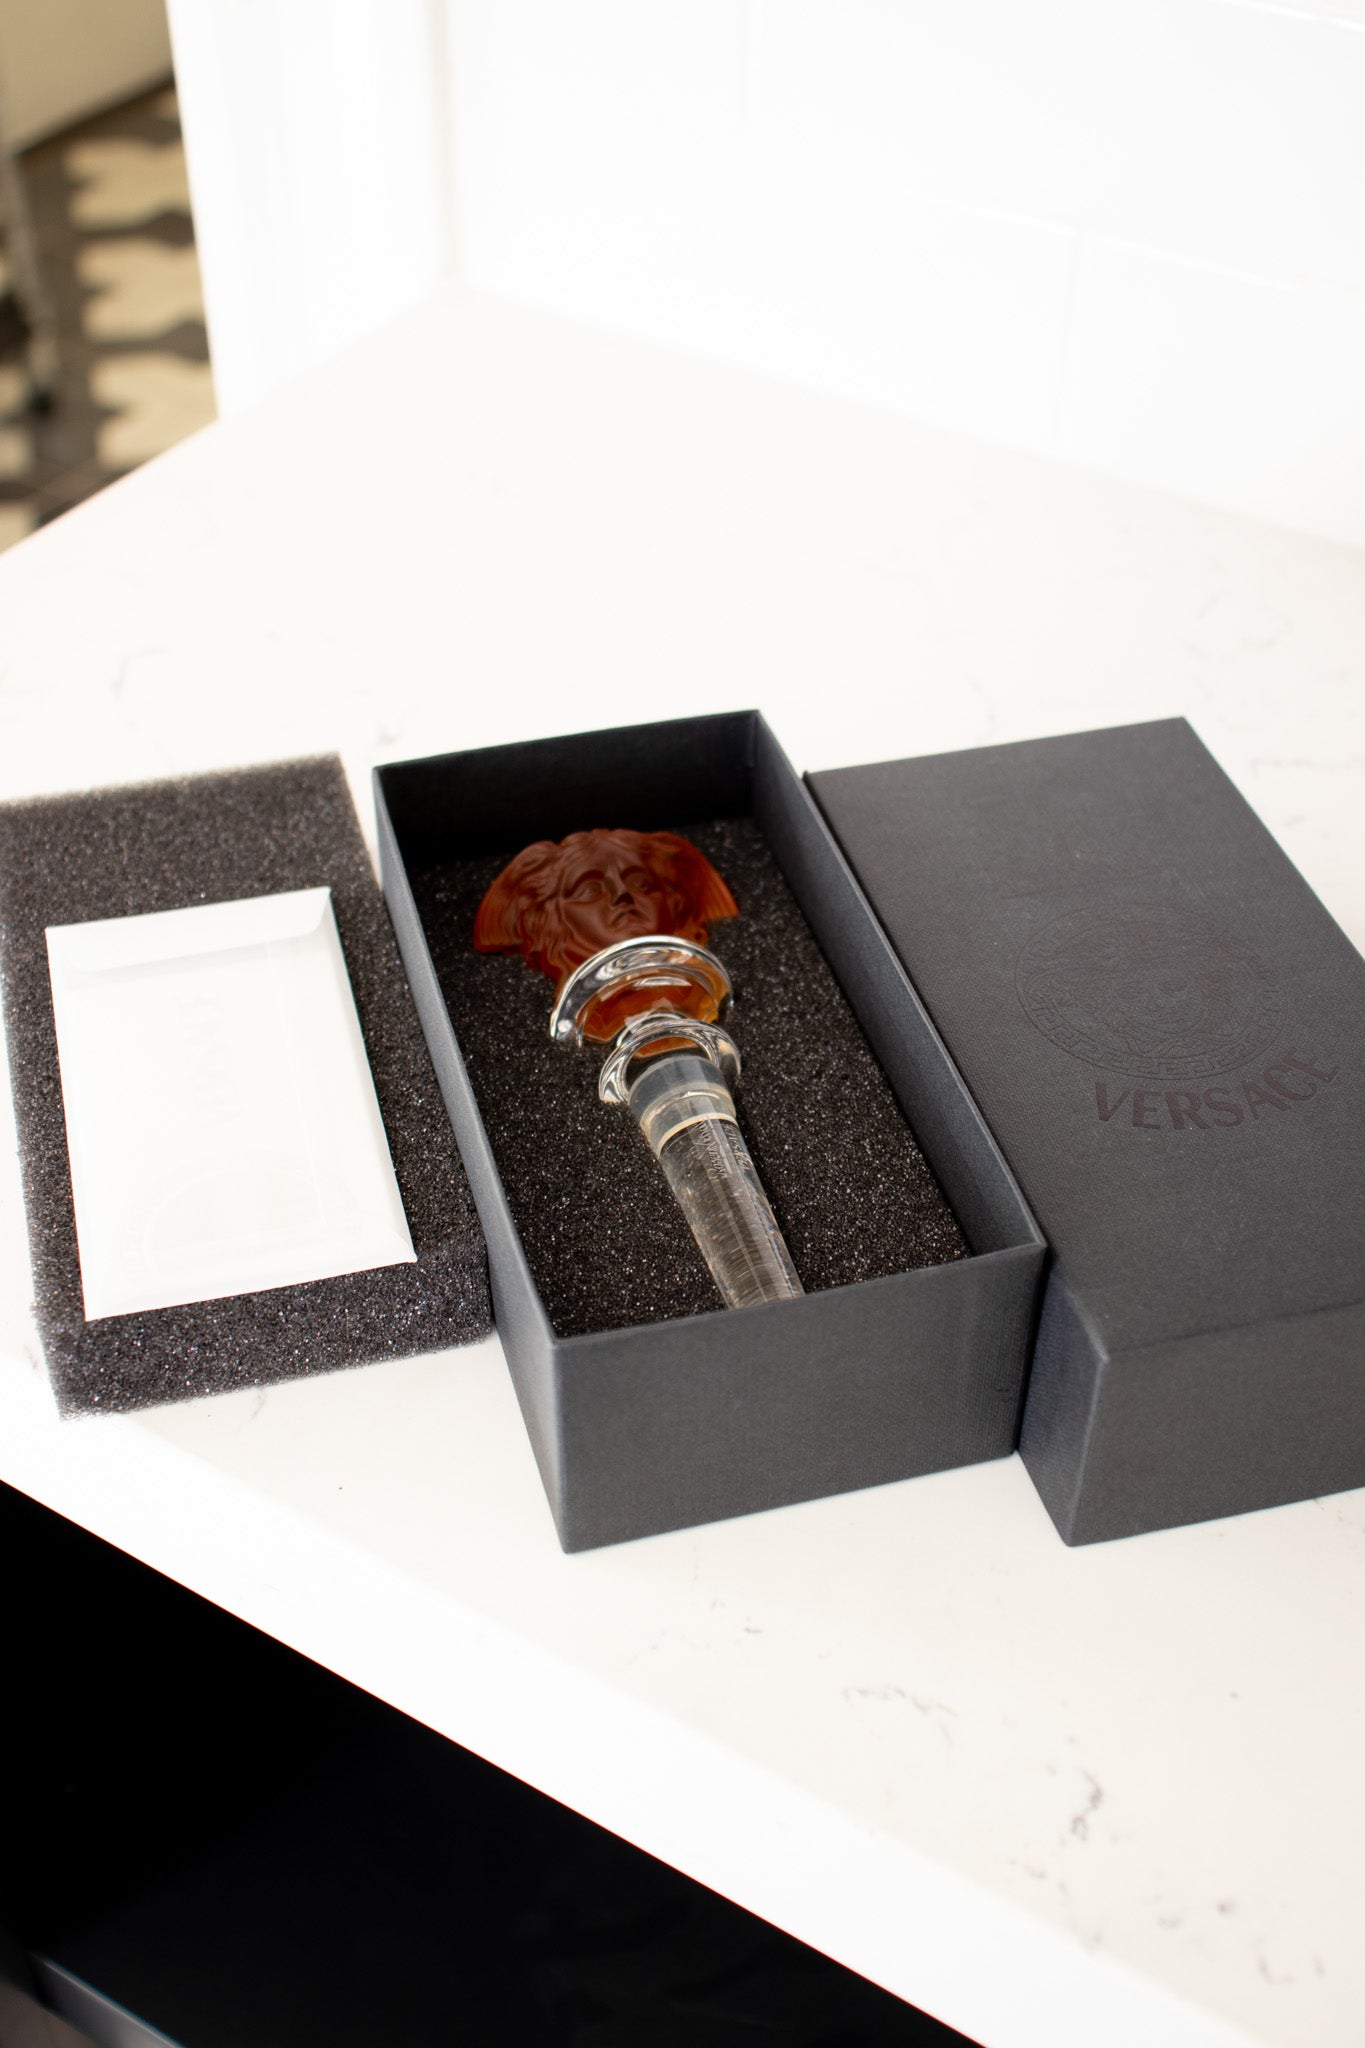 Vintage Versace Rosenthal Amber Medusa Crystal Bottle Stopper in box at Recess Home Los Angeles